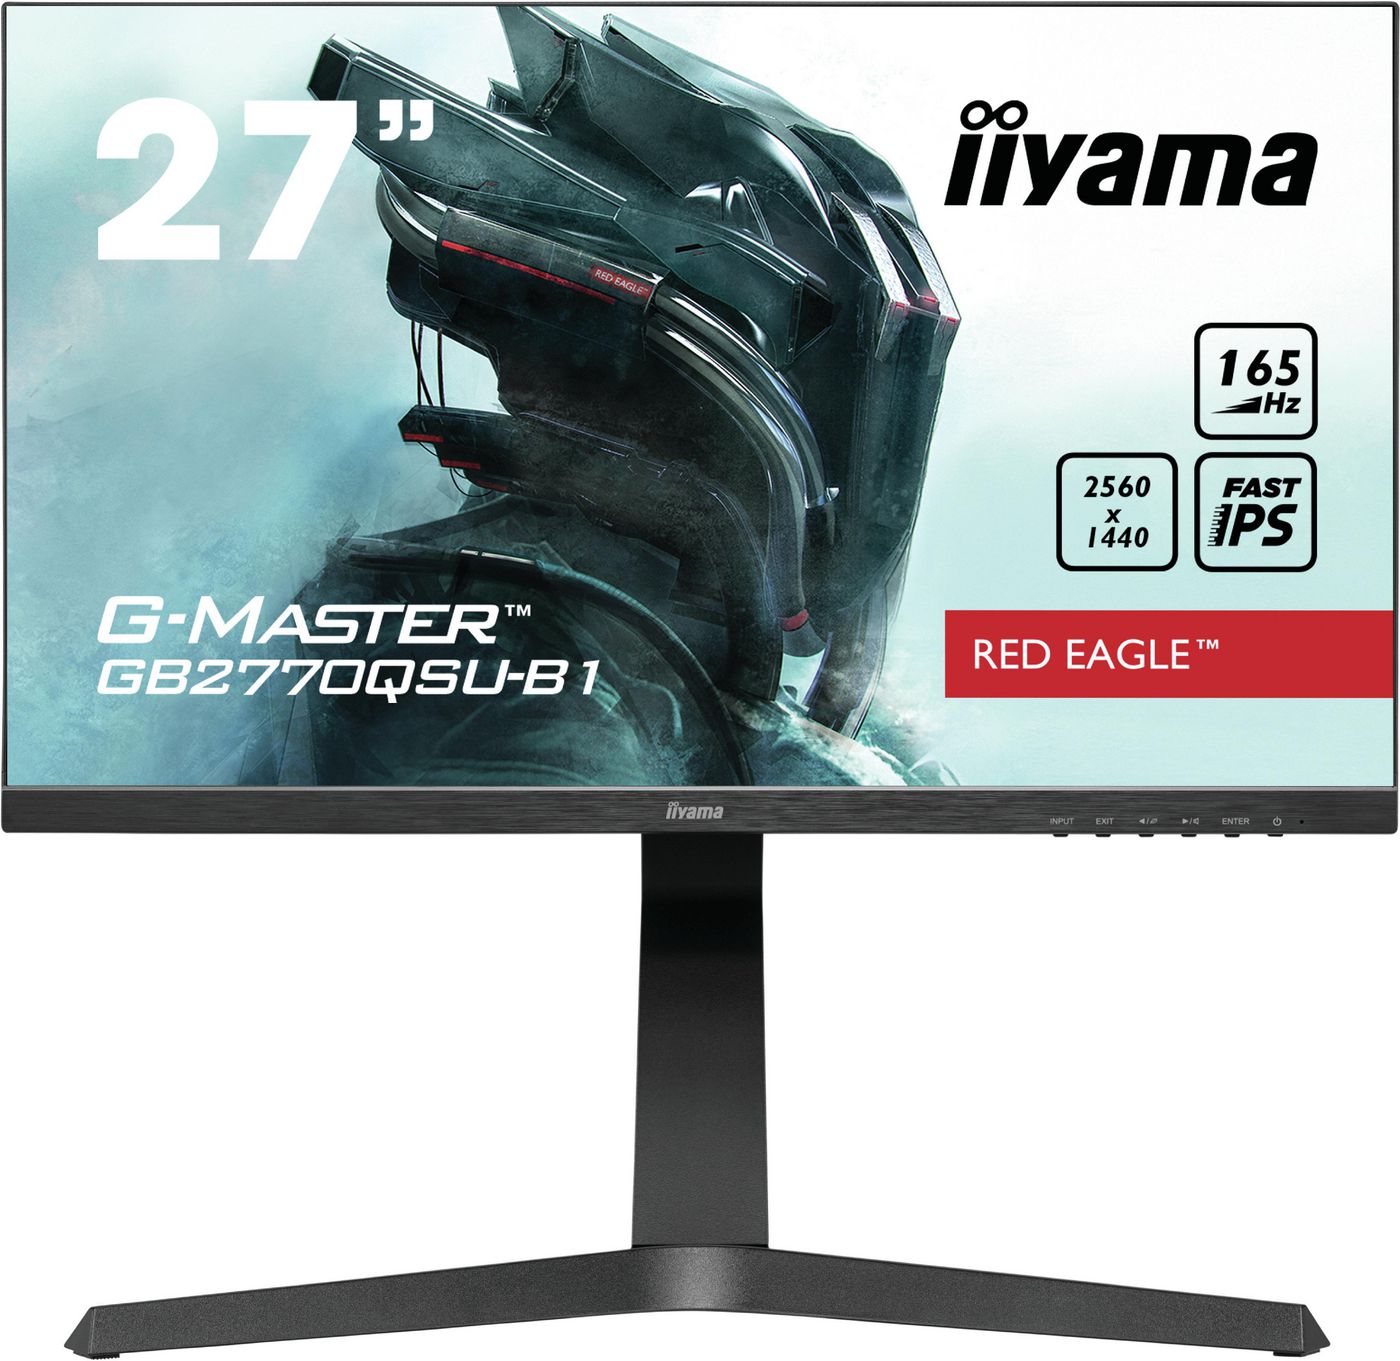 Desktop Monitor - G-MASTER GB2770QSU-B1 - 27in - 2560x1440 (WQHD) - Black